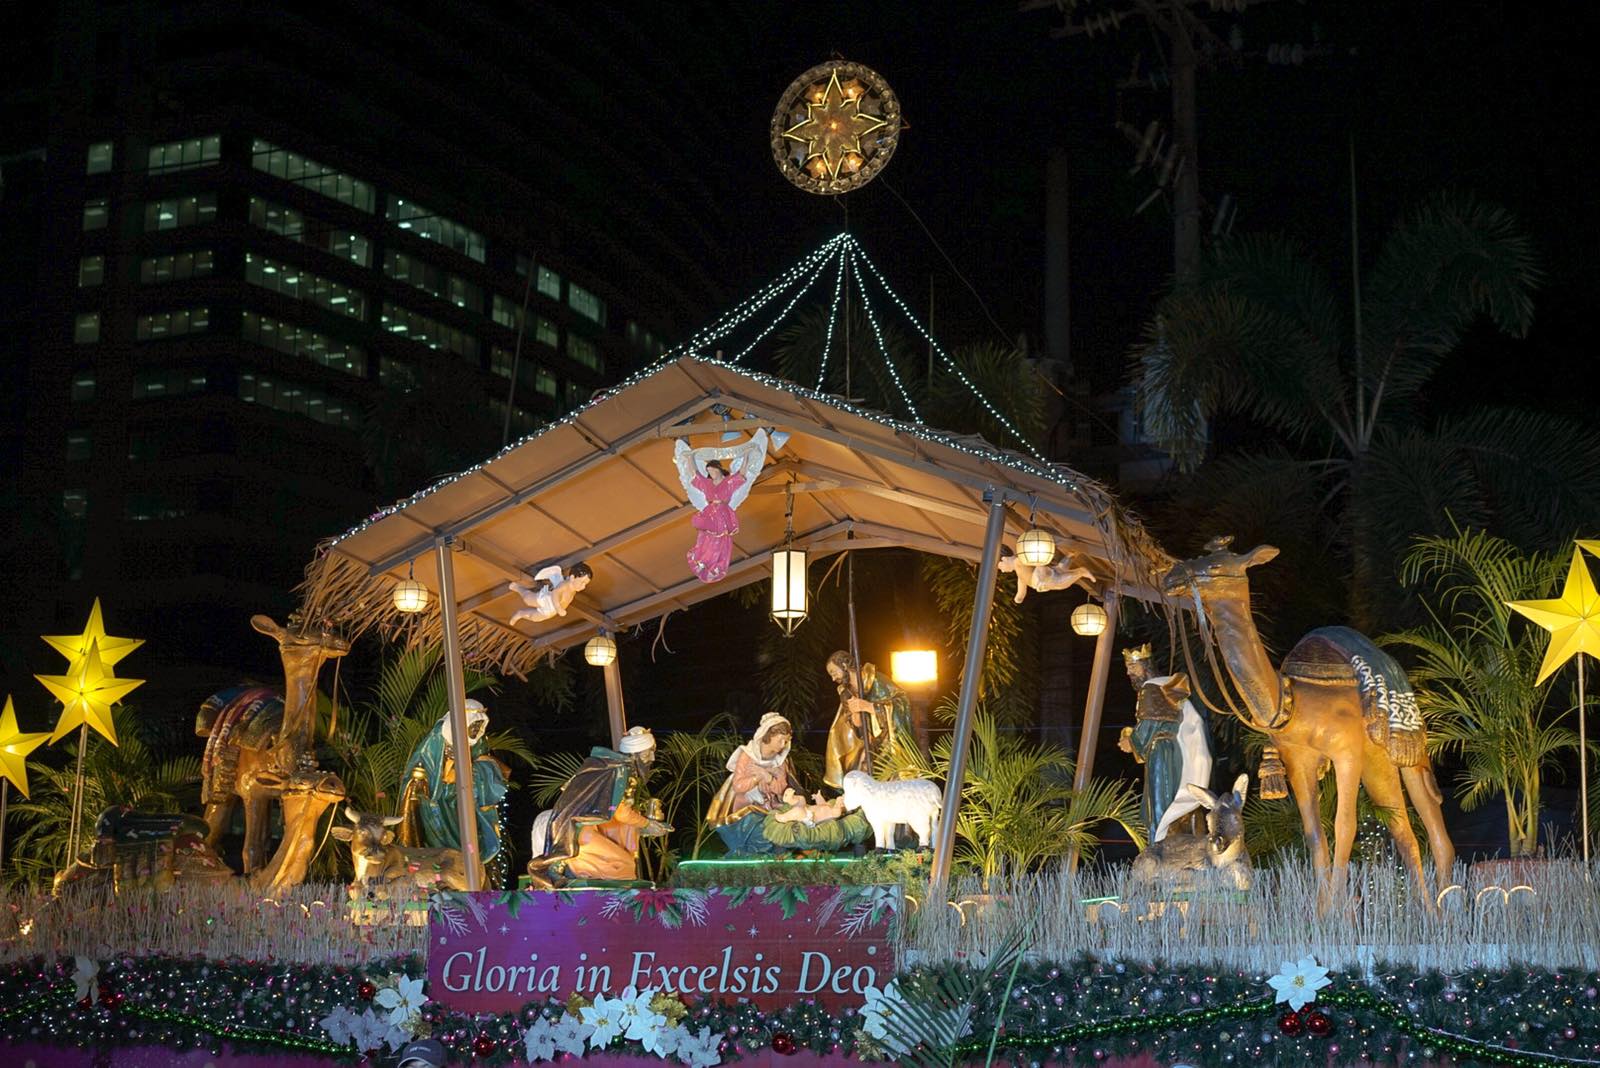 Araneta City upholds the magic of Christmas with traditional Belen lighting